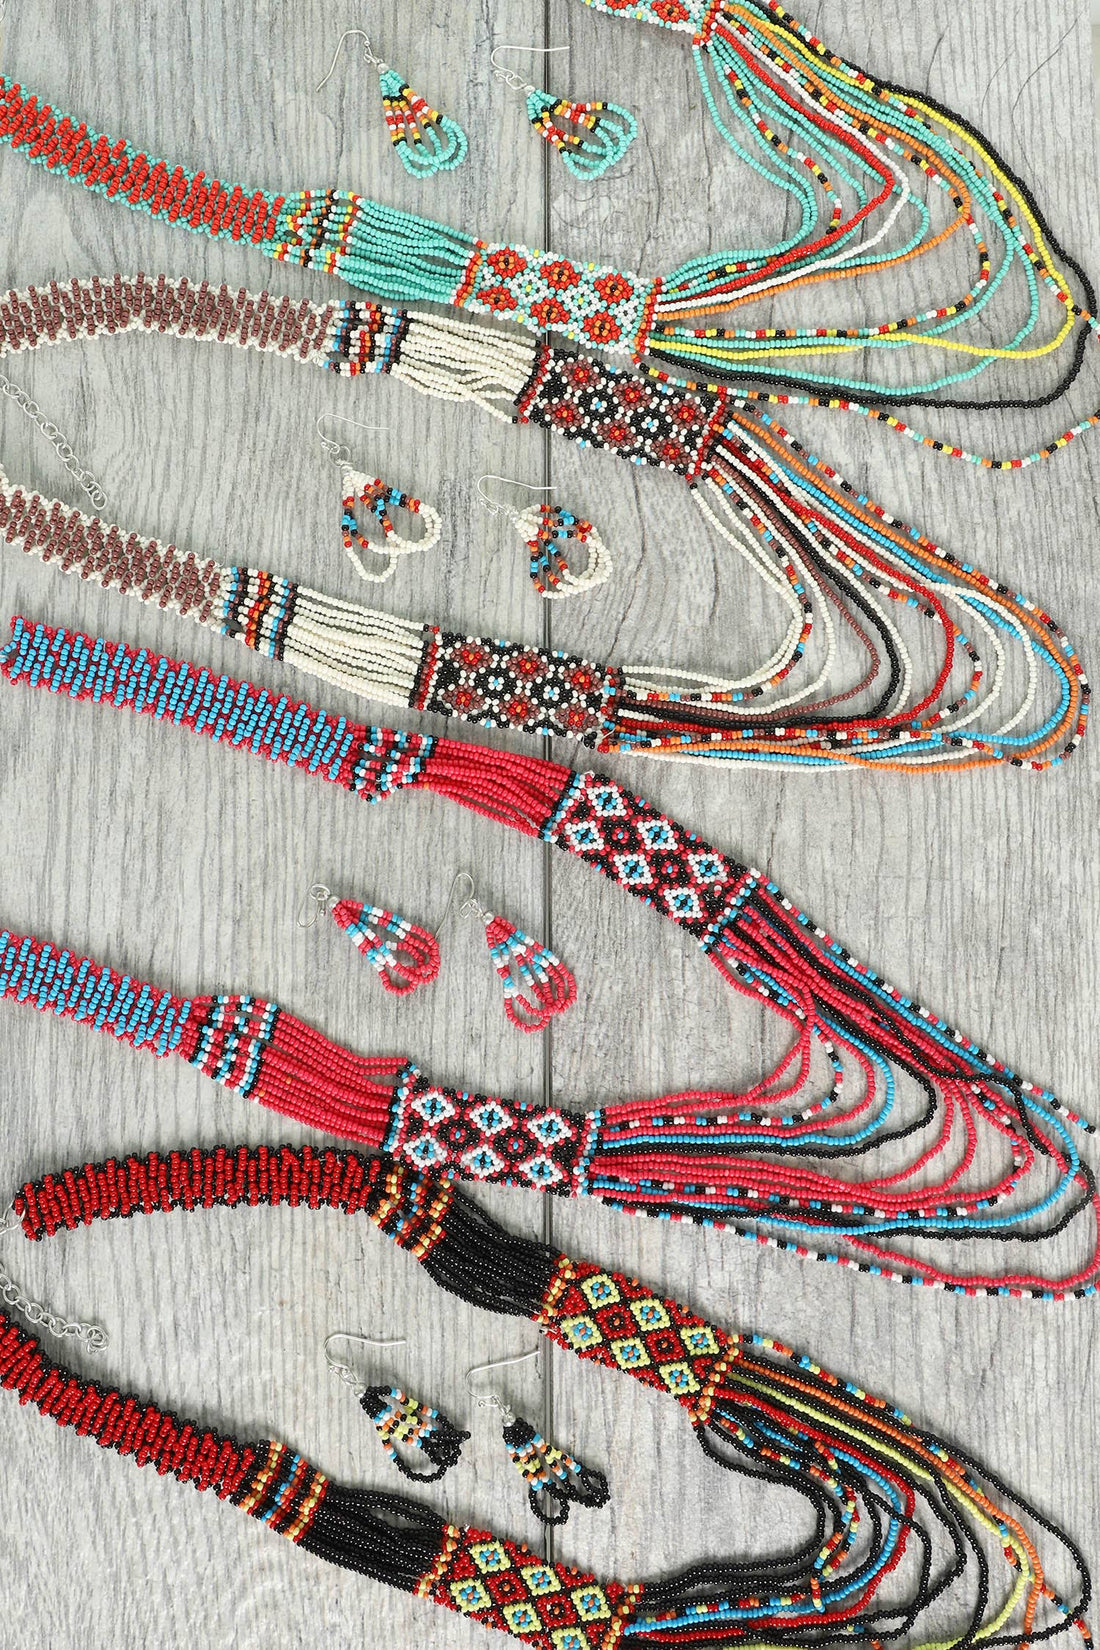 Native American Beaded Multi Strand Necklace Set: Black